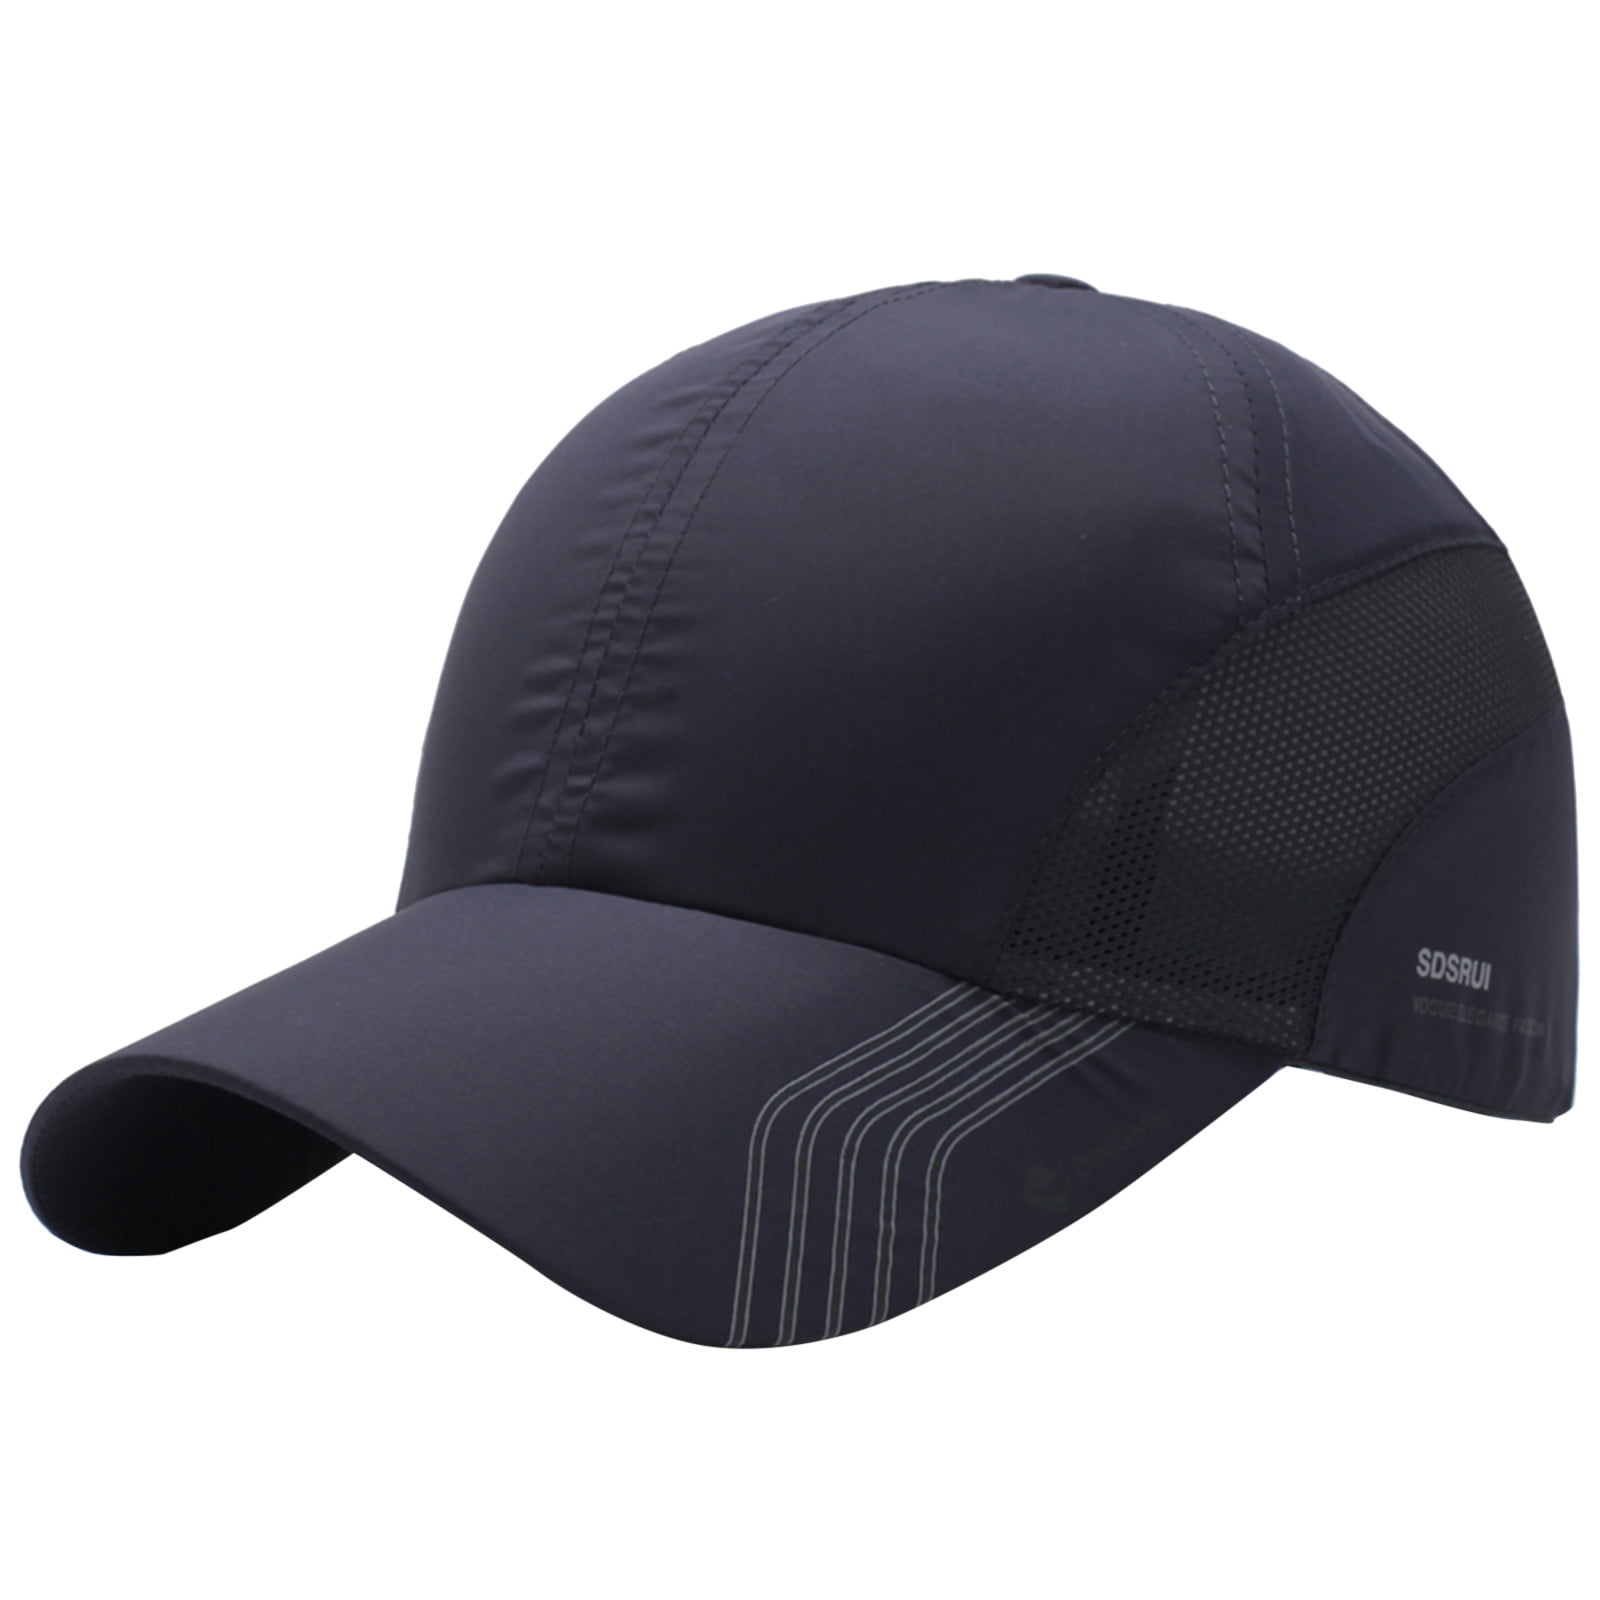 Sun Visor Hat Cap UV Protection - Premium Adjustable Solar Headband Face  Shield Black Mirrored